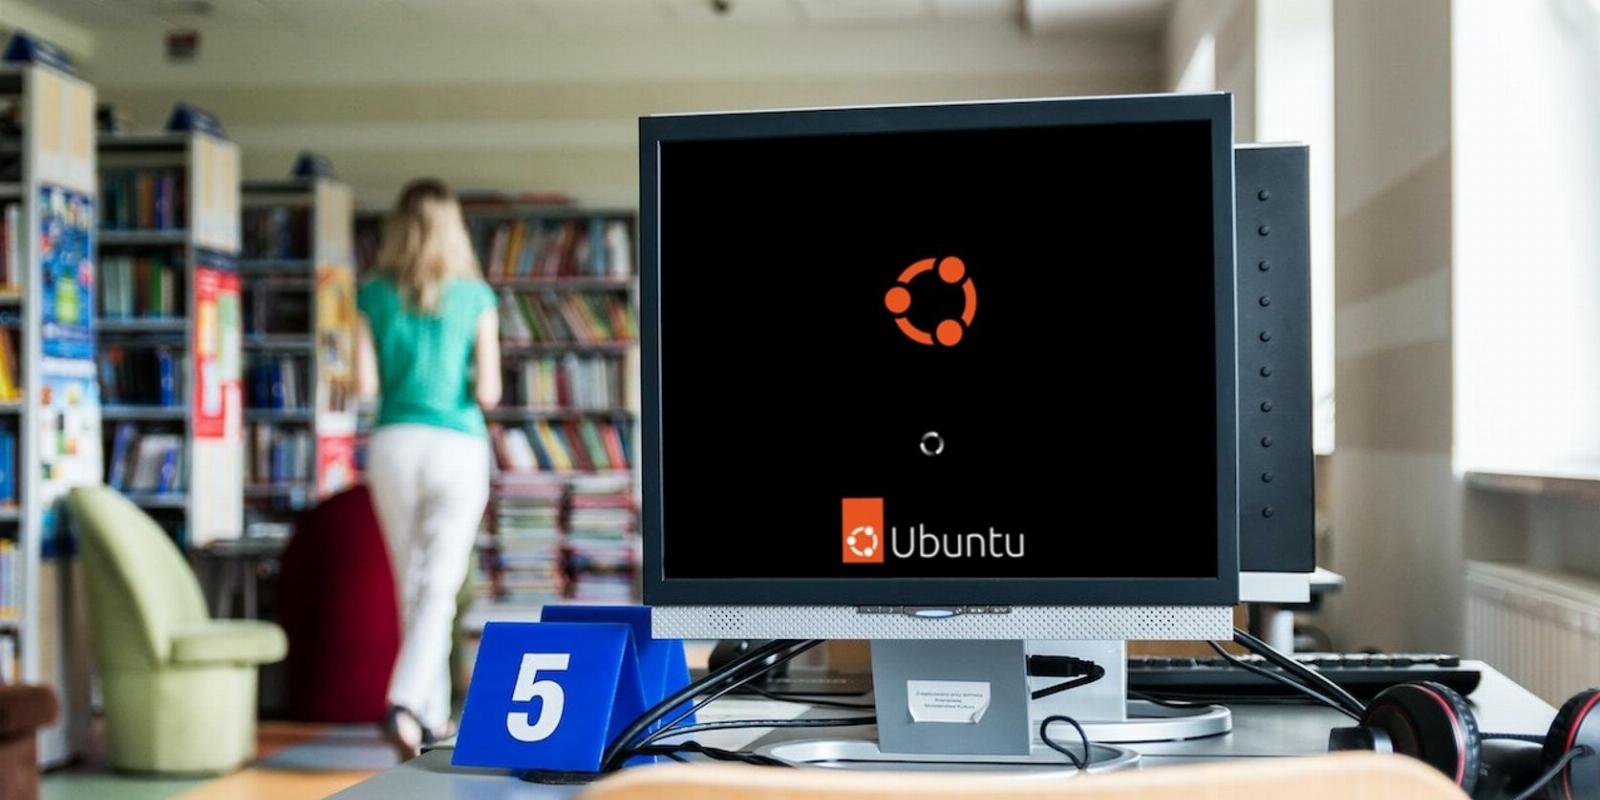 How to Quickly Change Default Apps on Ubuntu